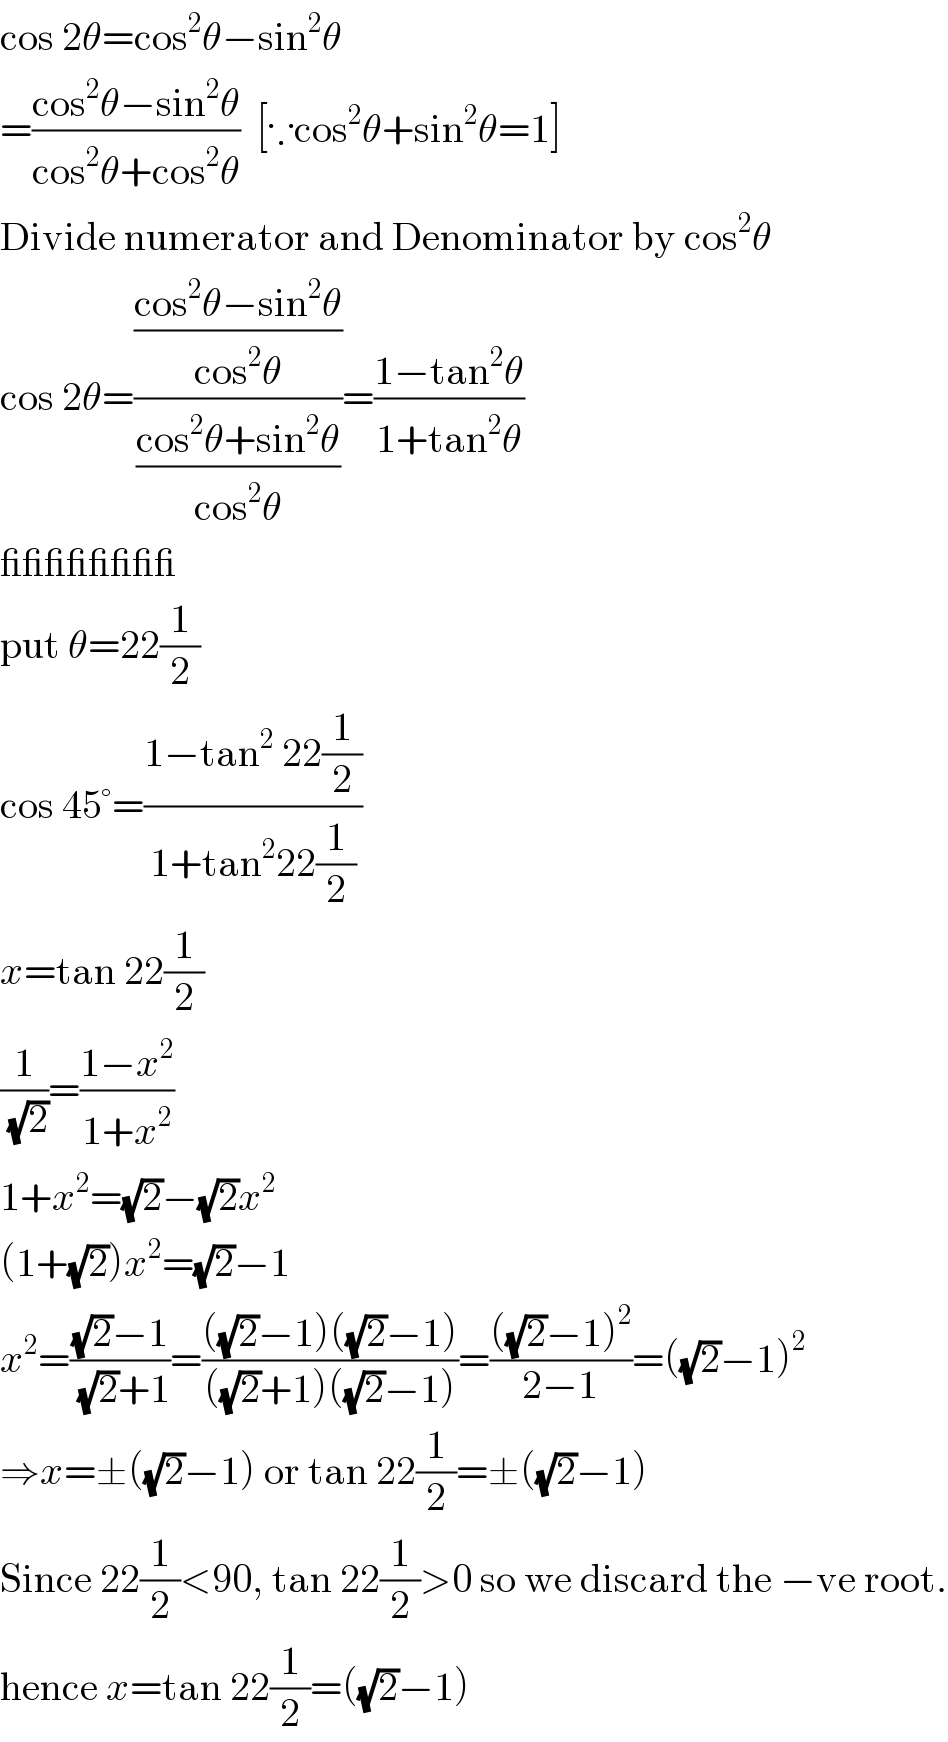 cos 2θ=cos^2 θ−sin^2 θ  =((cos^2 θ−sin^2 θ)/(cos^2 θ+cos^2 θ))  [∵cos^2 θ+sin^2 θ=1]  Divide numerator and Denominator by cos^2 θ  cos 2θ=(((cos^2 θ−sin^2 θ)/(cos^2 θ))/((cos^2 θ+sin^2 θ)/(cos^2 θ)))=((1−tan^2 θ)/(1+tan^2 θ))  ________  put θ=22(1/2)  cos 45°=((1−tan^2  22(1/2))/(1+tan^2 22(1/2)))  x=tan 22(1/2)  (1/(√2))=((1−x^2 )/(1+x^2 ))  1+x^2 =(√2)−(√2)x^2   (1+(√2))x^2 =(√2)−1  x^2 =(((√2)−1)/((√2)+1))=((((√2)−1)((√2)−1))/(((√2)+1)((√2)−1)))=((((√2)−1)^2 )/(2−1))=((√2)−1)^2   ⇒x=±((√2)−1) or tan 22(1/2)=±((√2)−1)  Since 22(1/2)<90, tan 22(1/2)>0 so we discard the −ve root.  hence x=tan 22(1/2)=((√2)−1)  